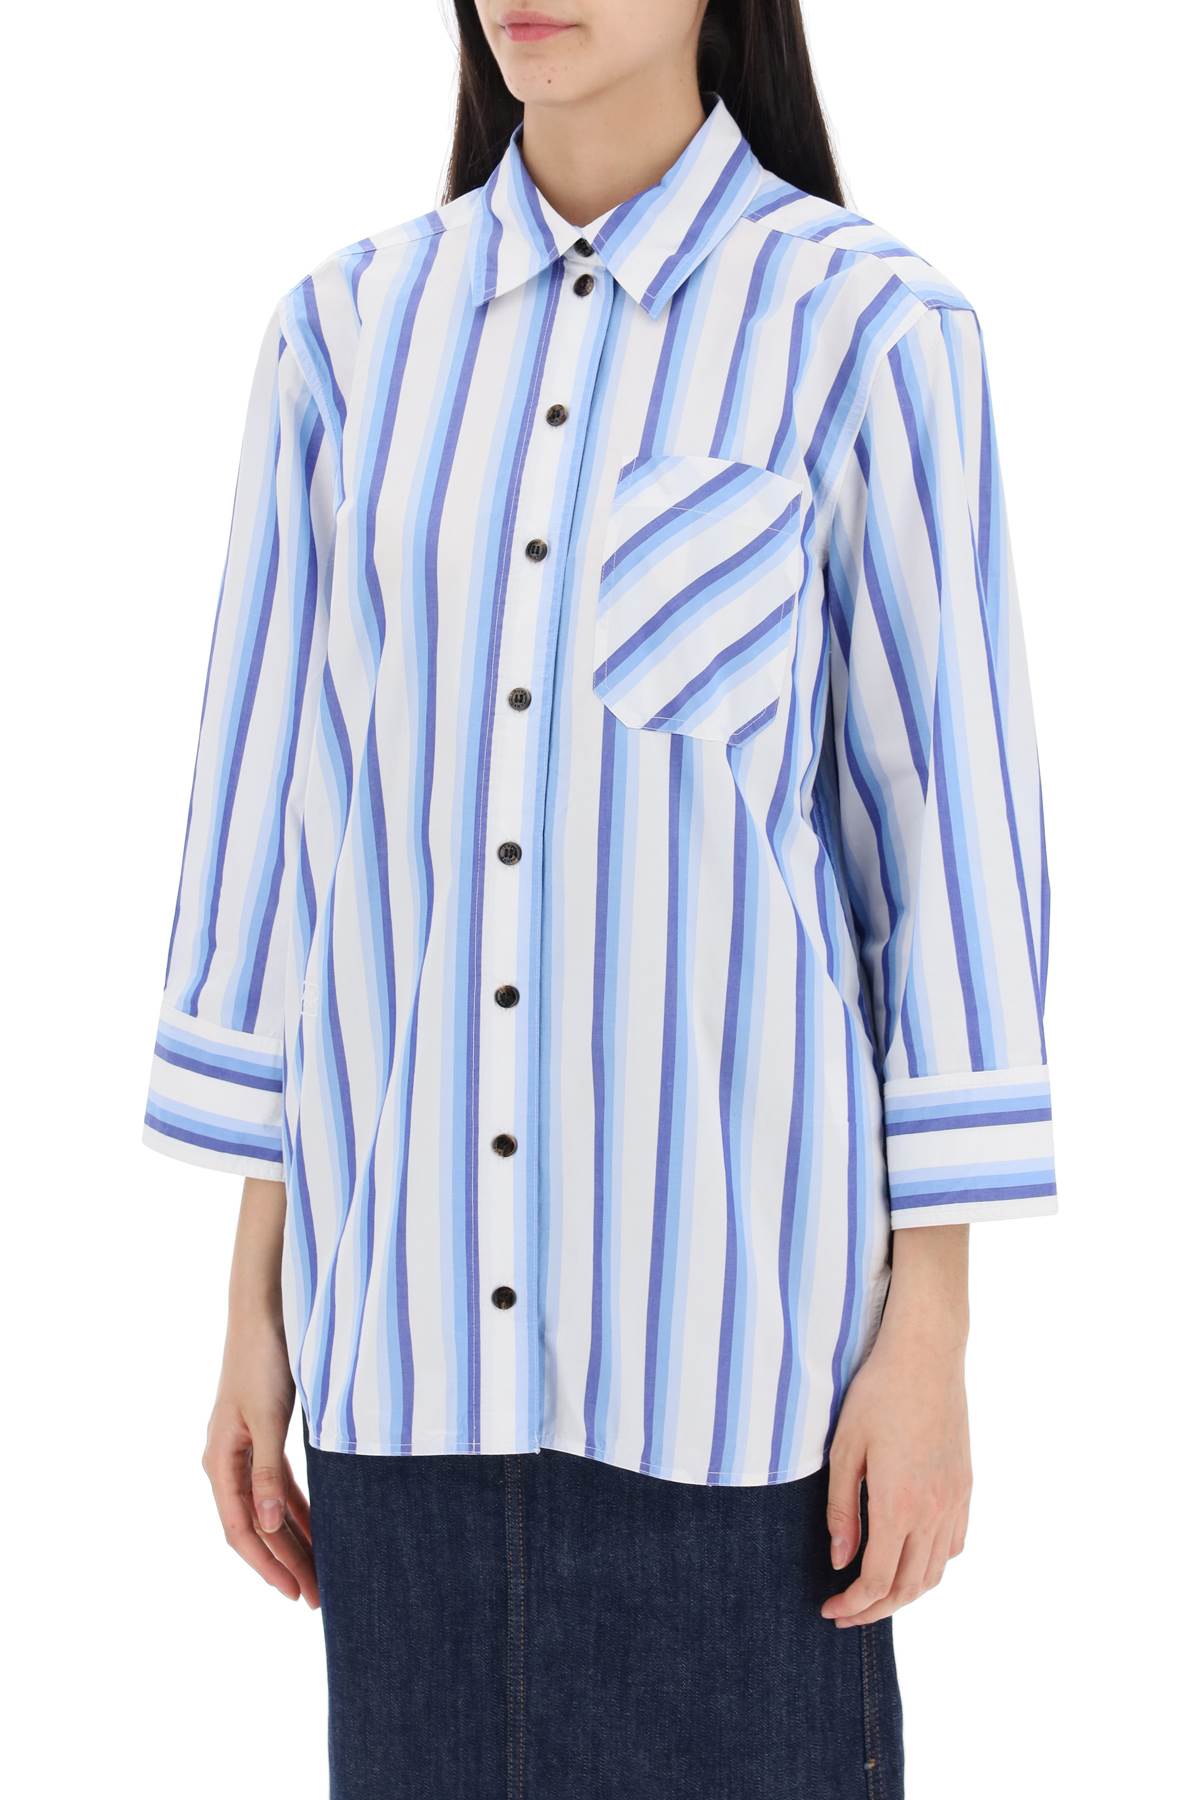 Ganni "oversized striped poplin shirt-3